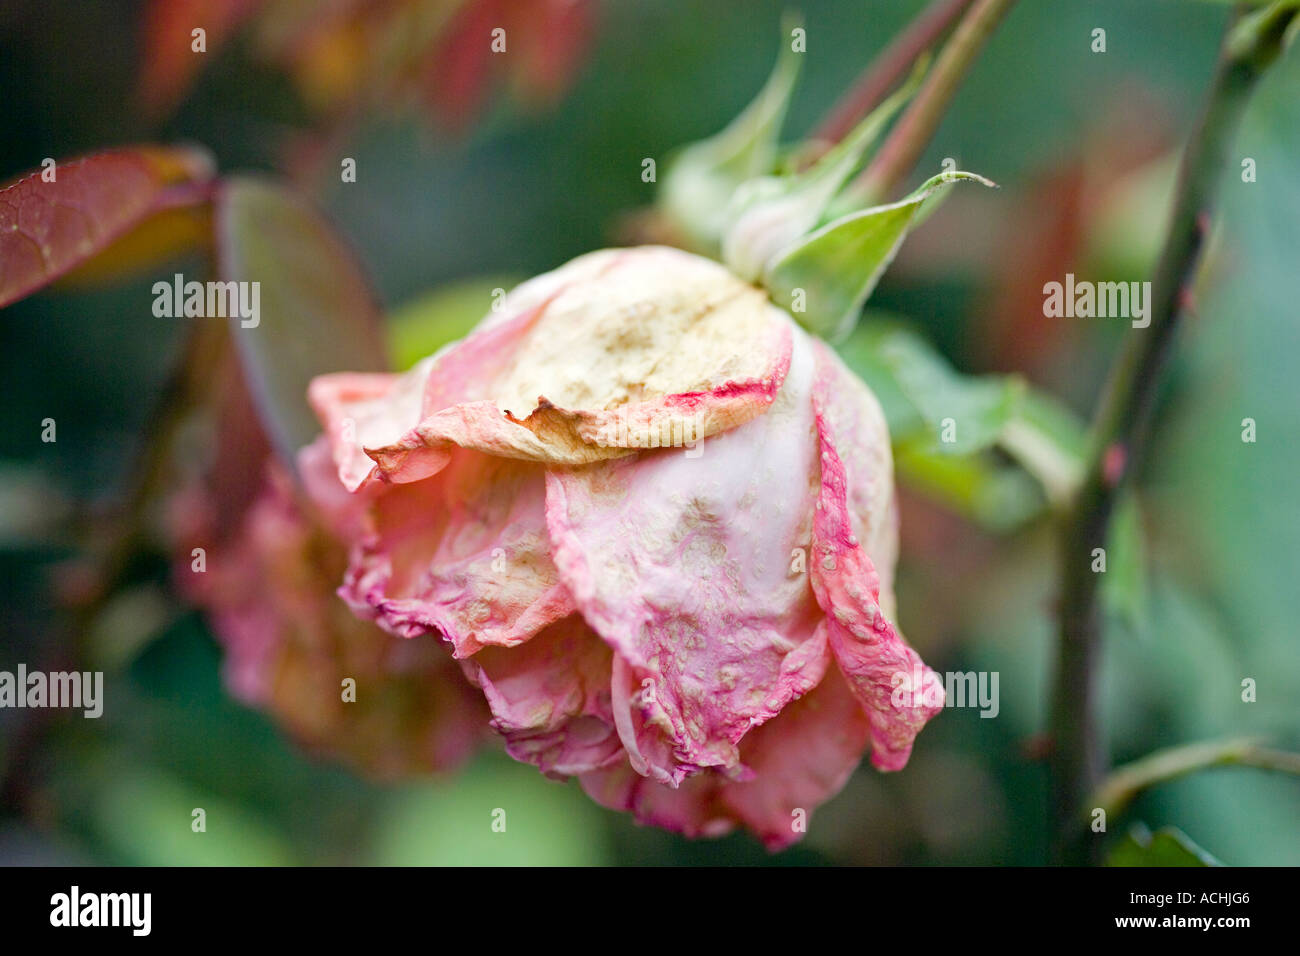 Rosa Blessings rosebud hybrid tea rose with fading flowerhead Stock Photo